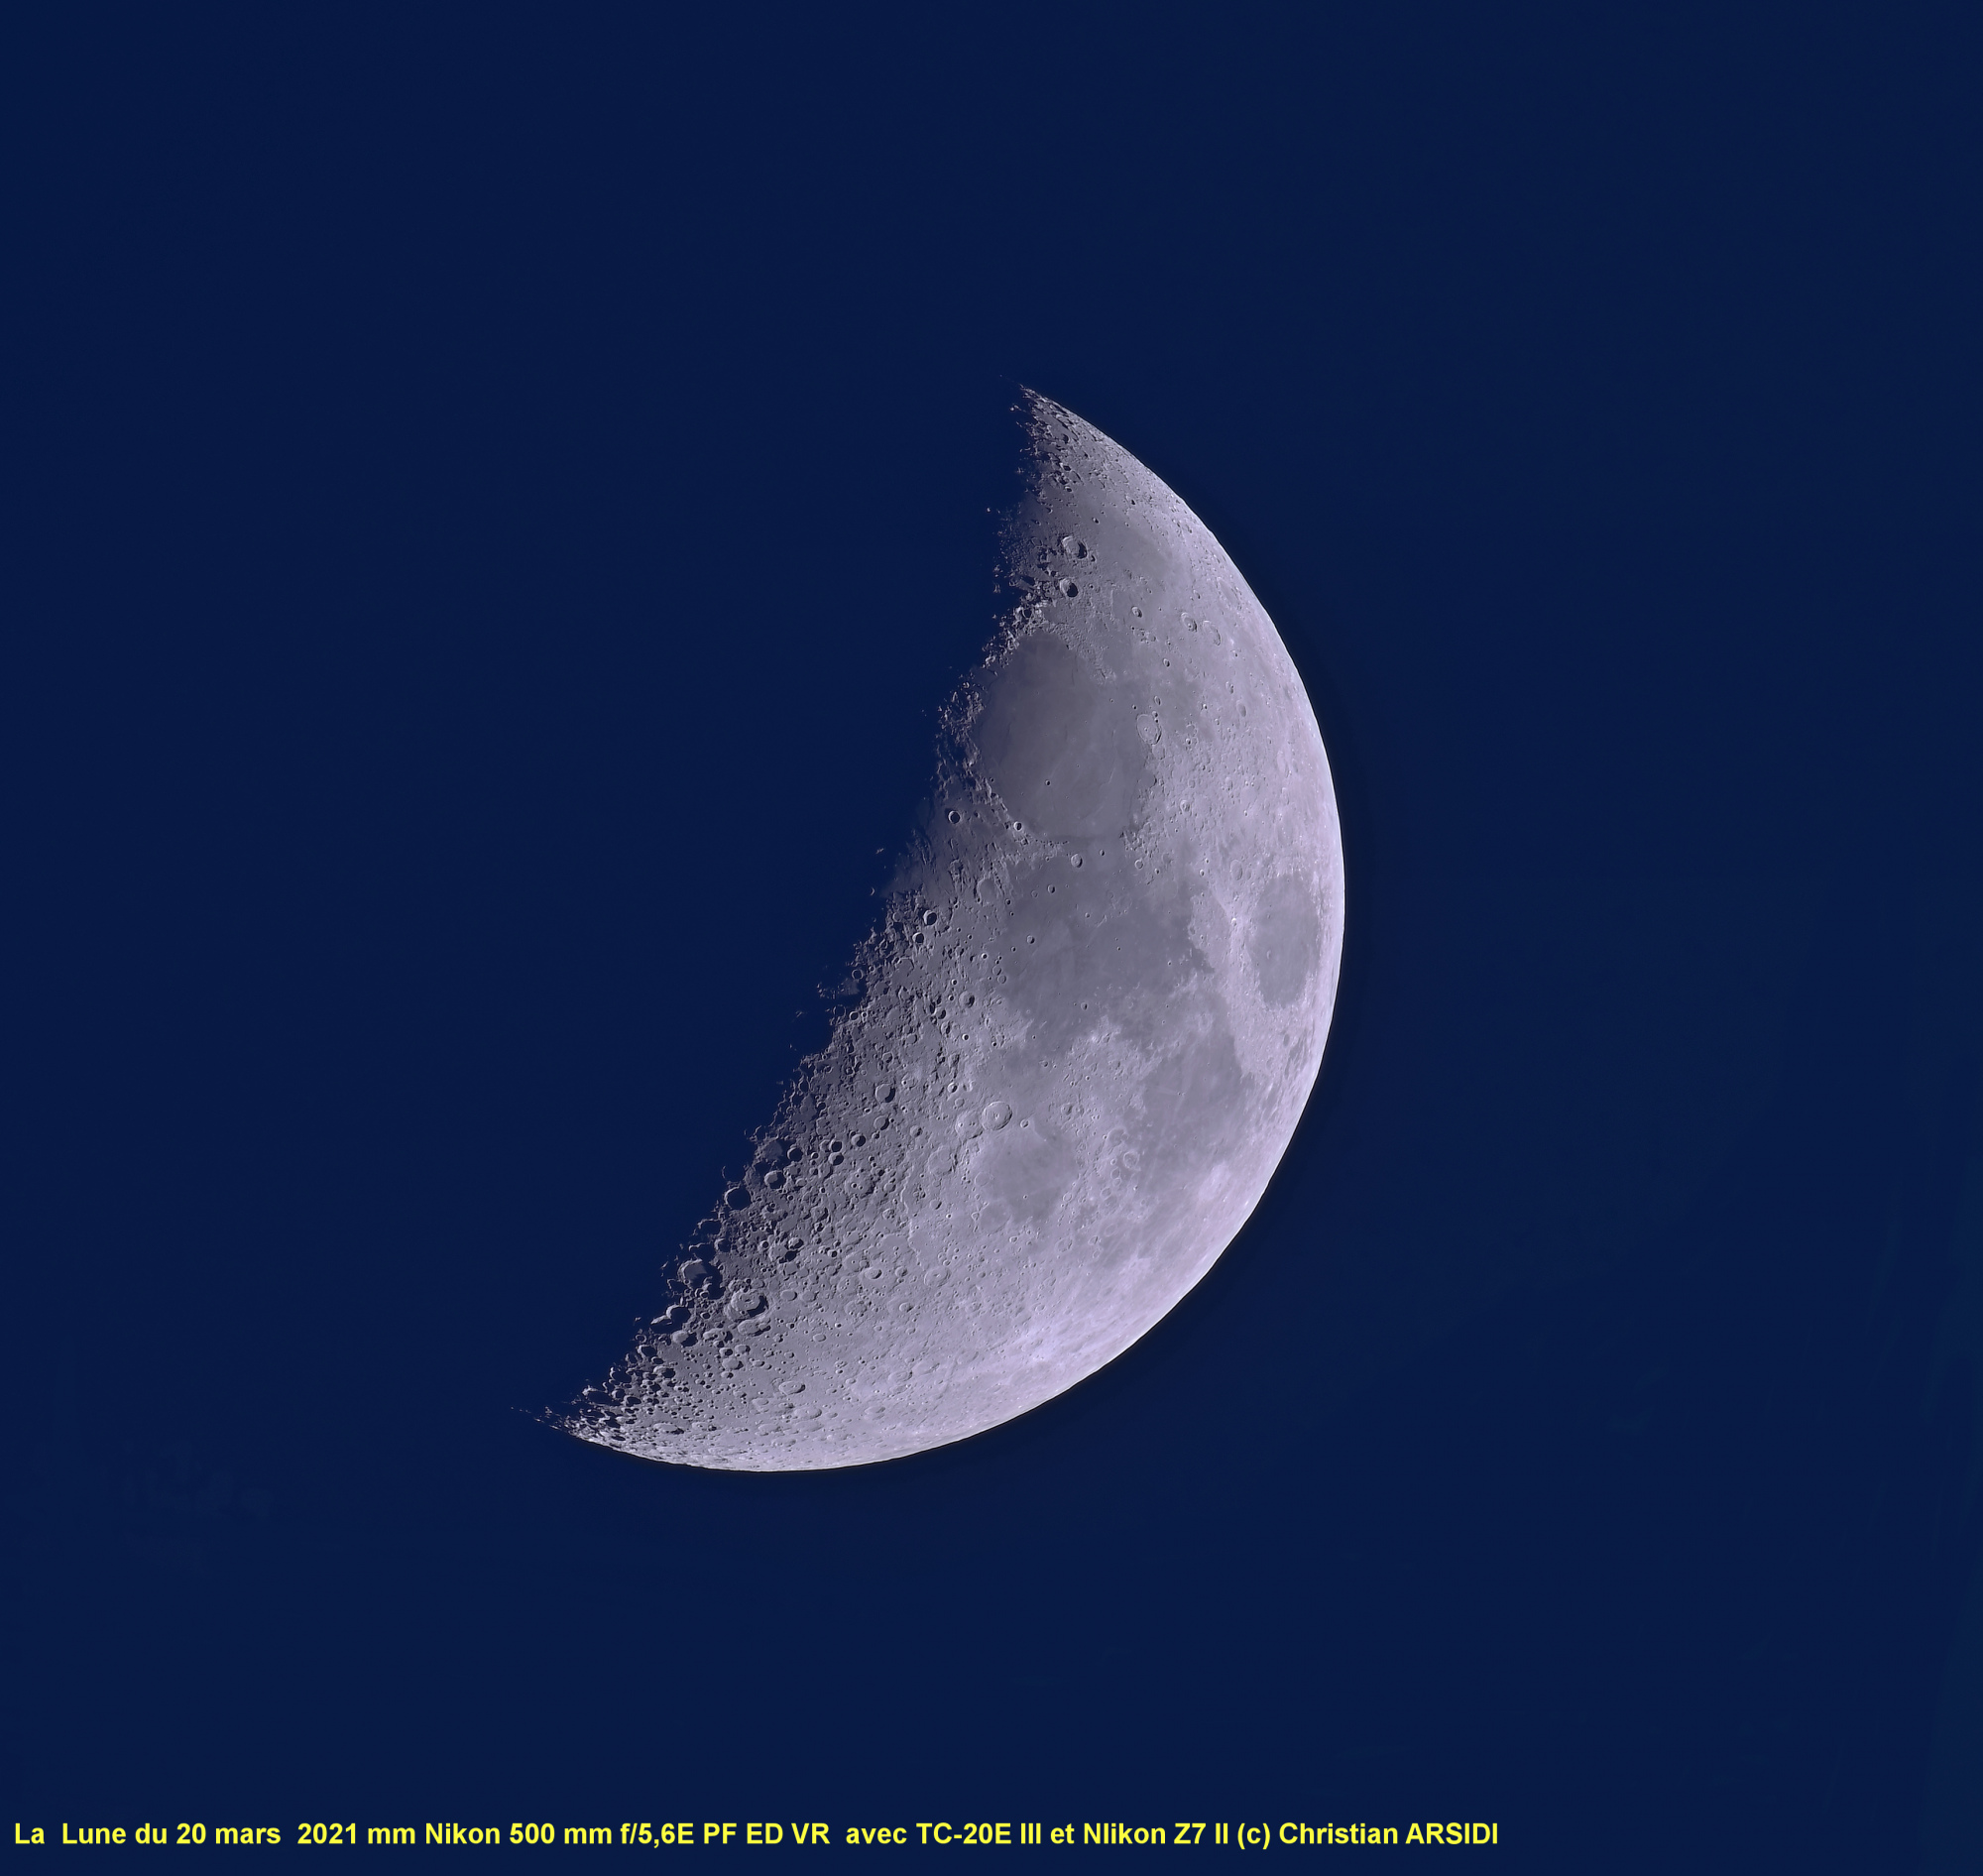 La Lune 20 images V4 TTB_DxO-1 1 JPEG.jpg